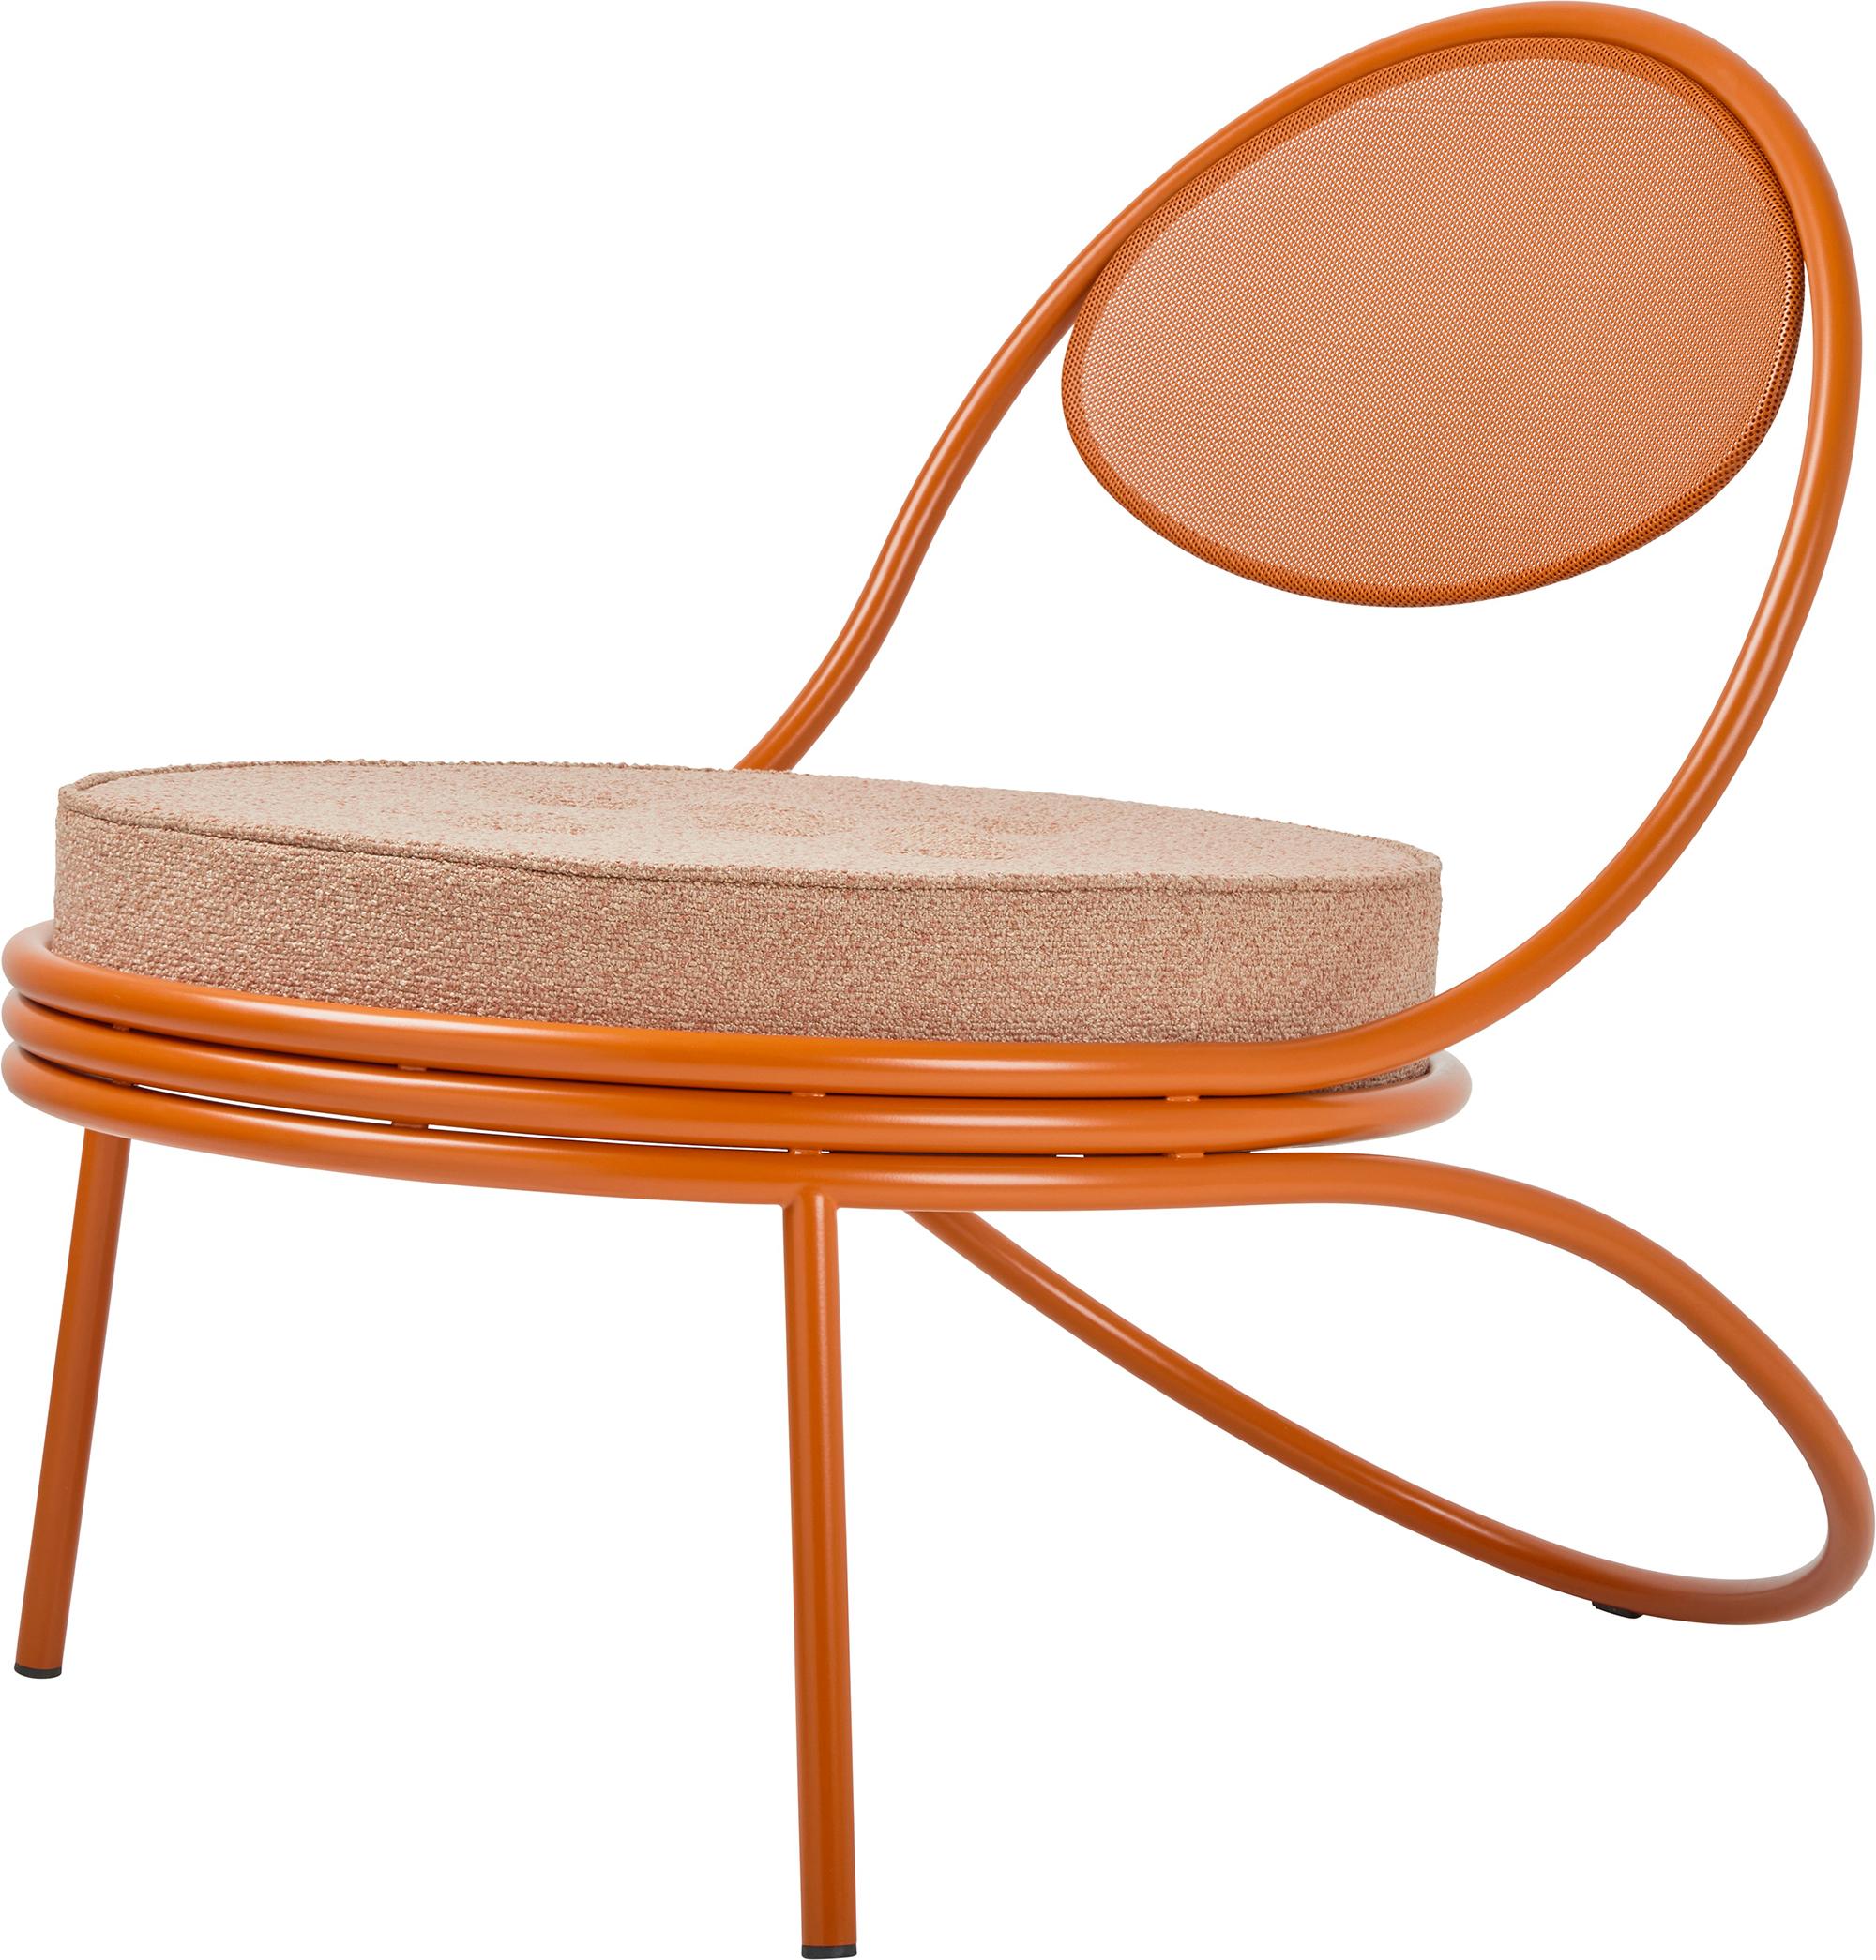 'Copacabana' Indoor Outdoor Lounge Chair by Mathieu Matégot in Leslie Fabric For Sale 4